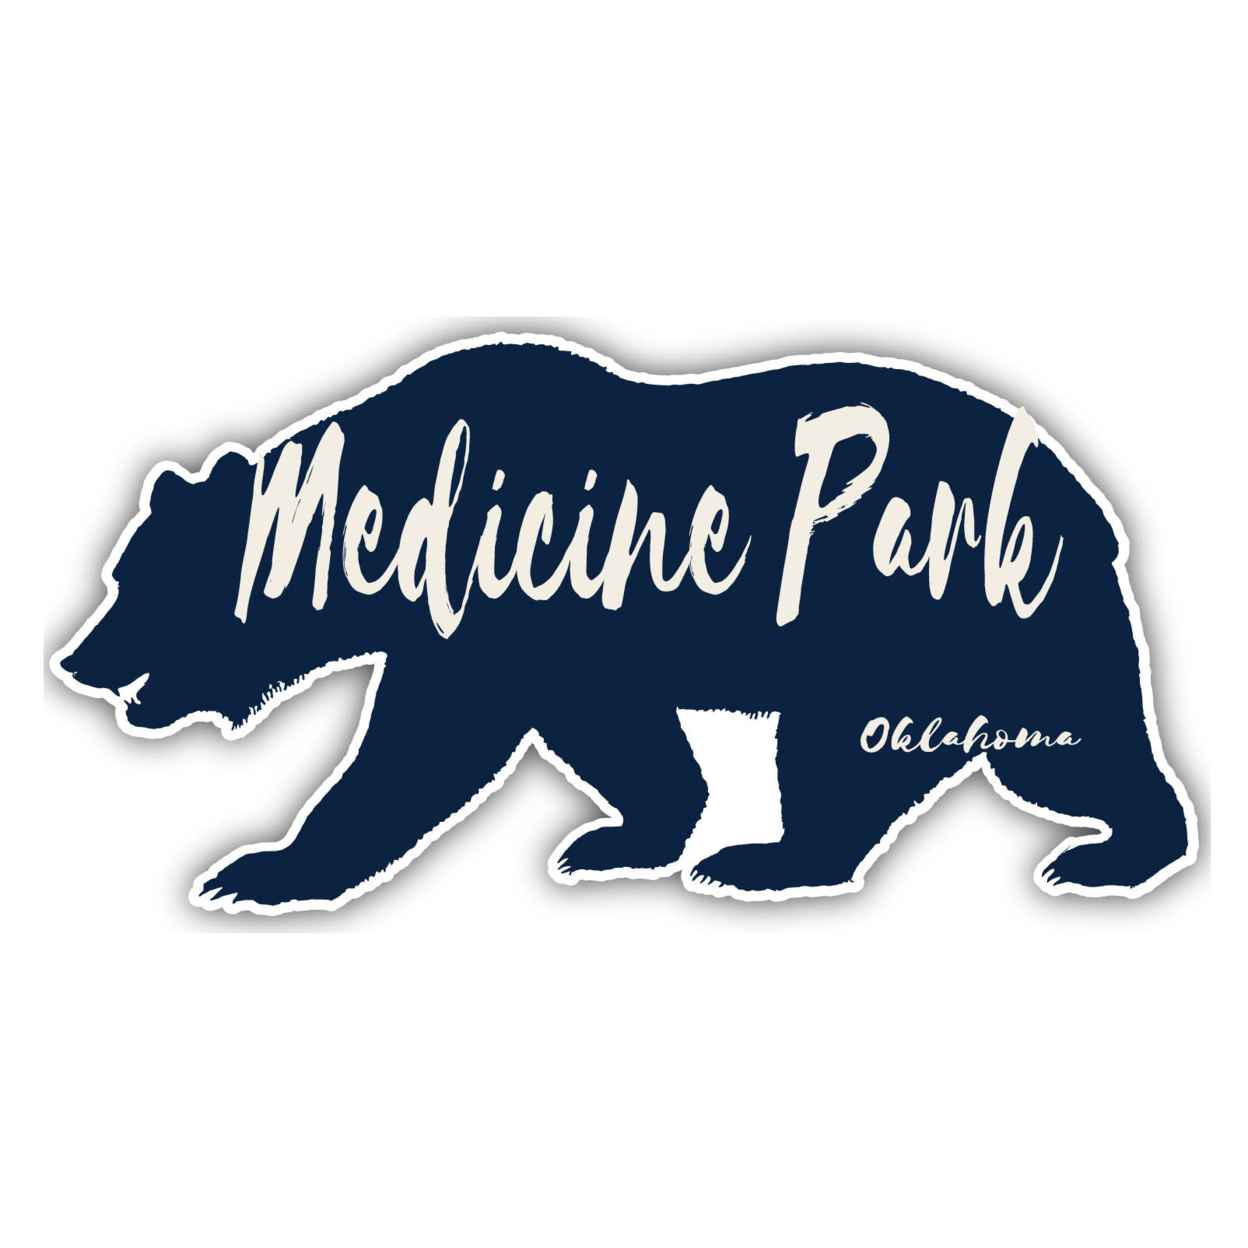 Medicine Park Oklahoma Souvenir Decorative Stickers (Choose Theme And Size) - 4-Inch, Tent